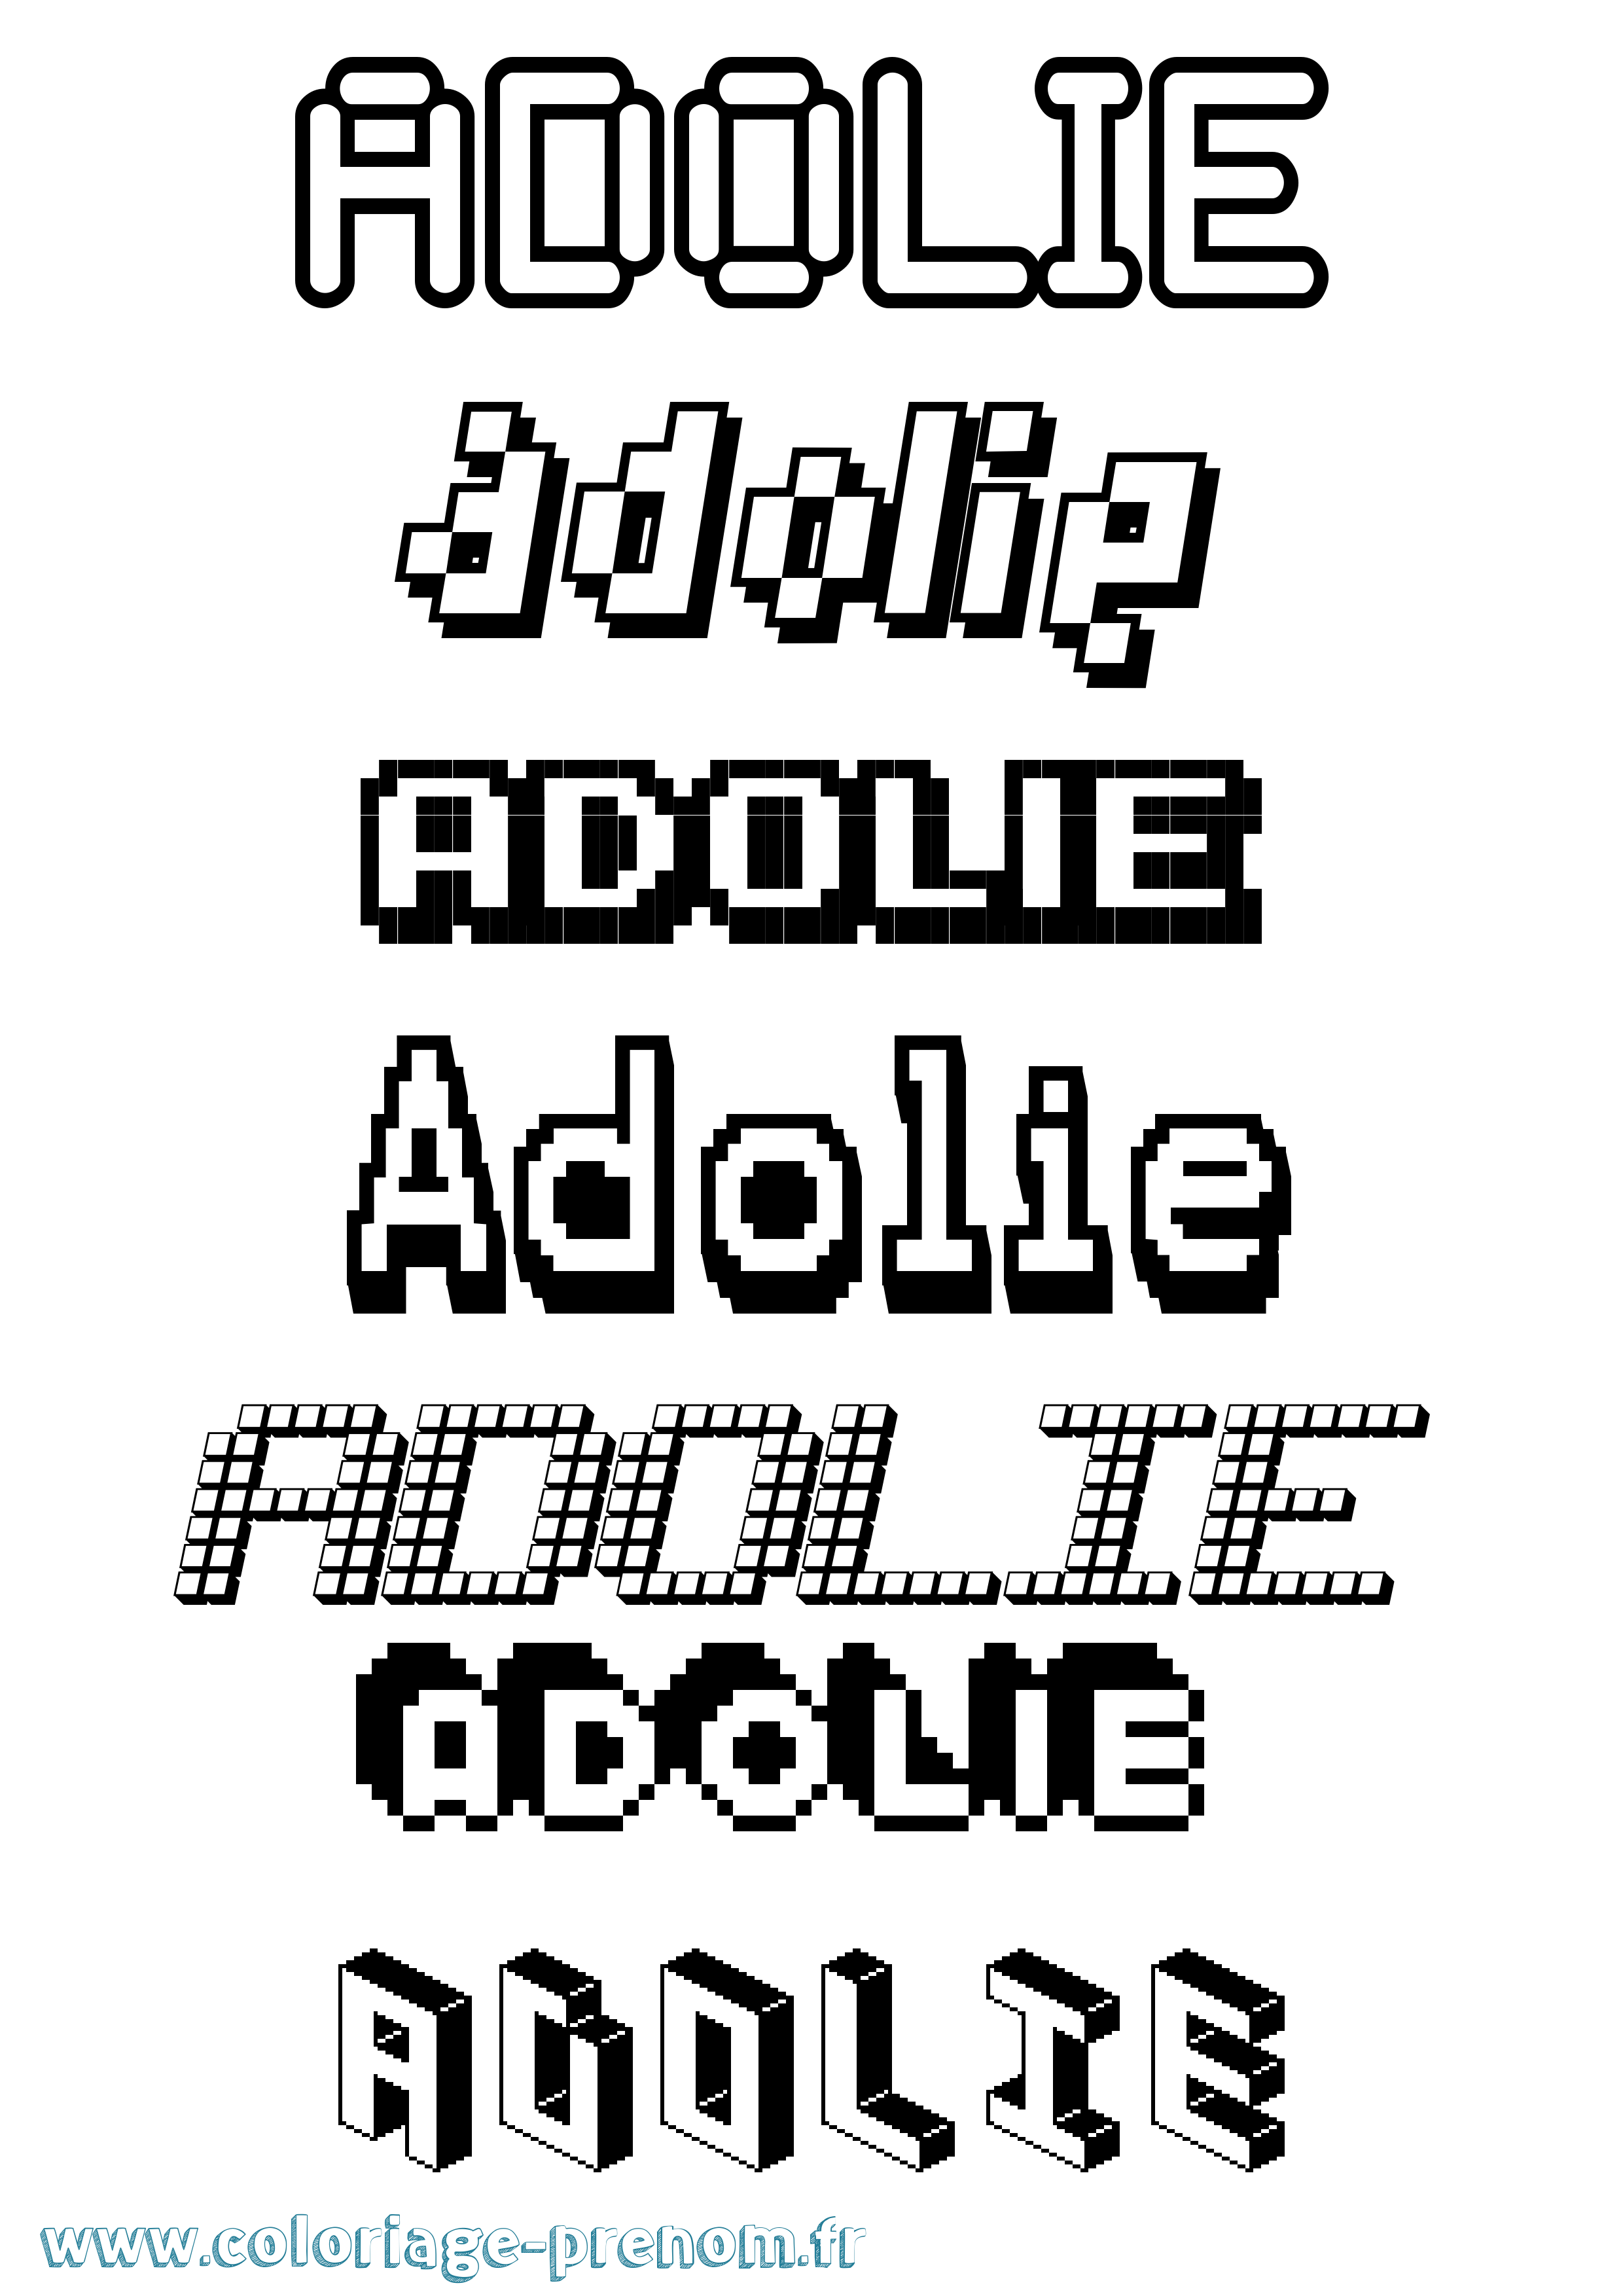 Coloriage prénom Adolie Pixel